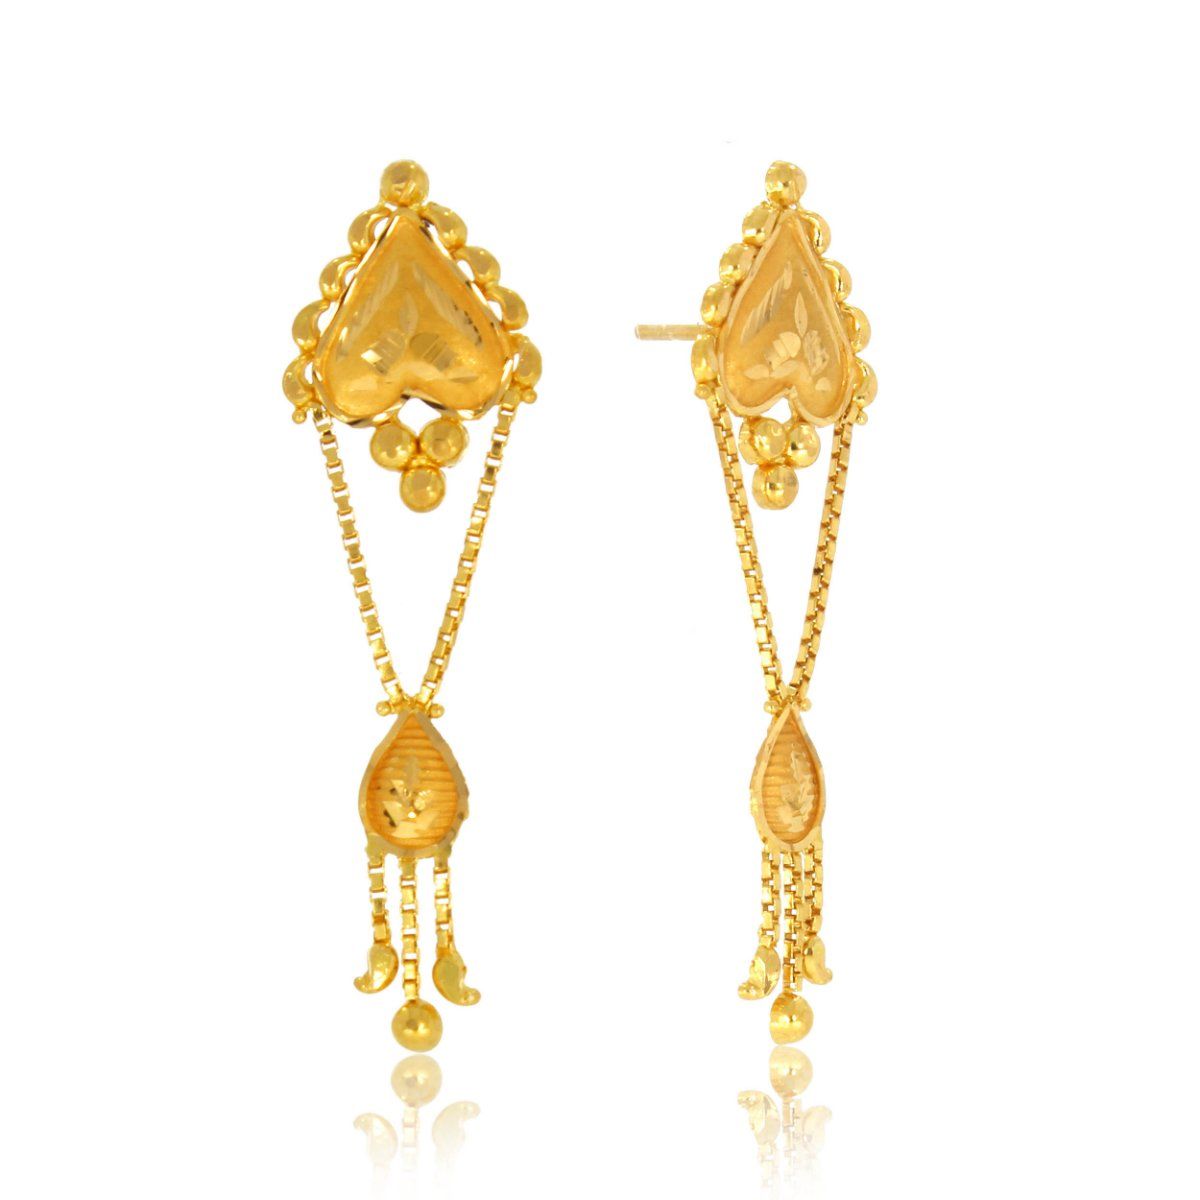 Plain Gold Earrings  Minimalistic and Elegant Designs  Shop Now   Jewelegance